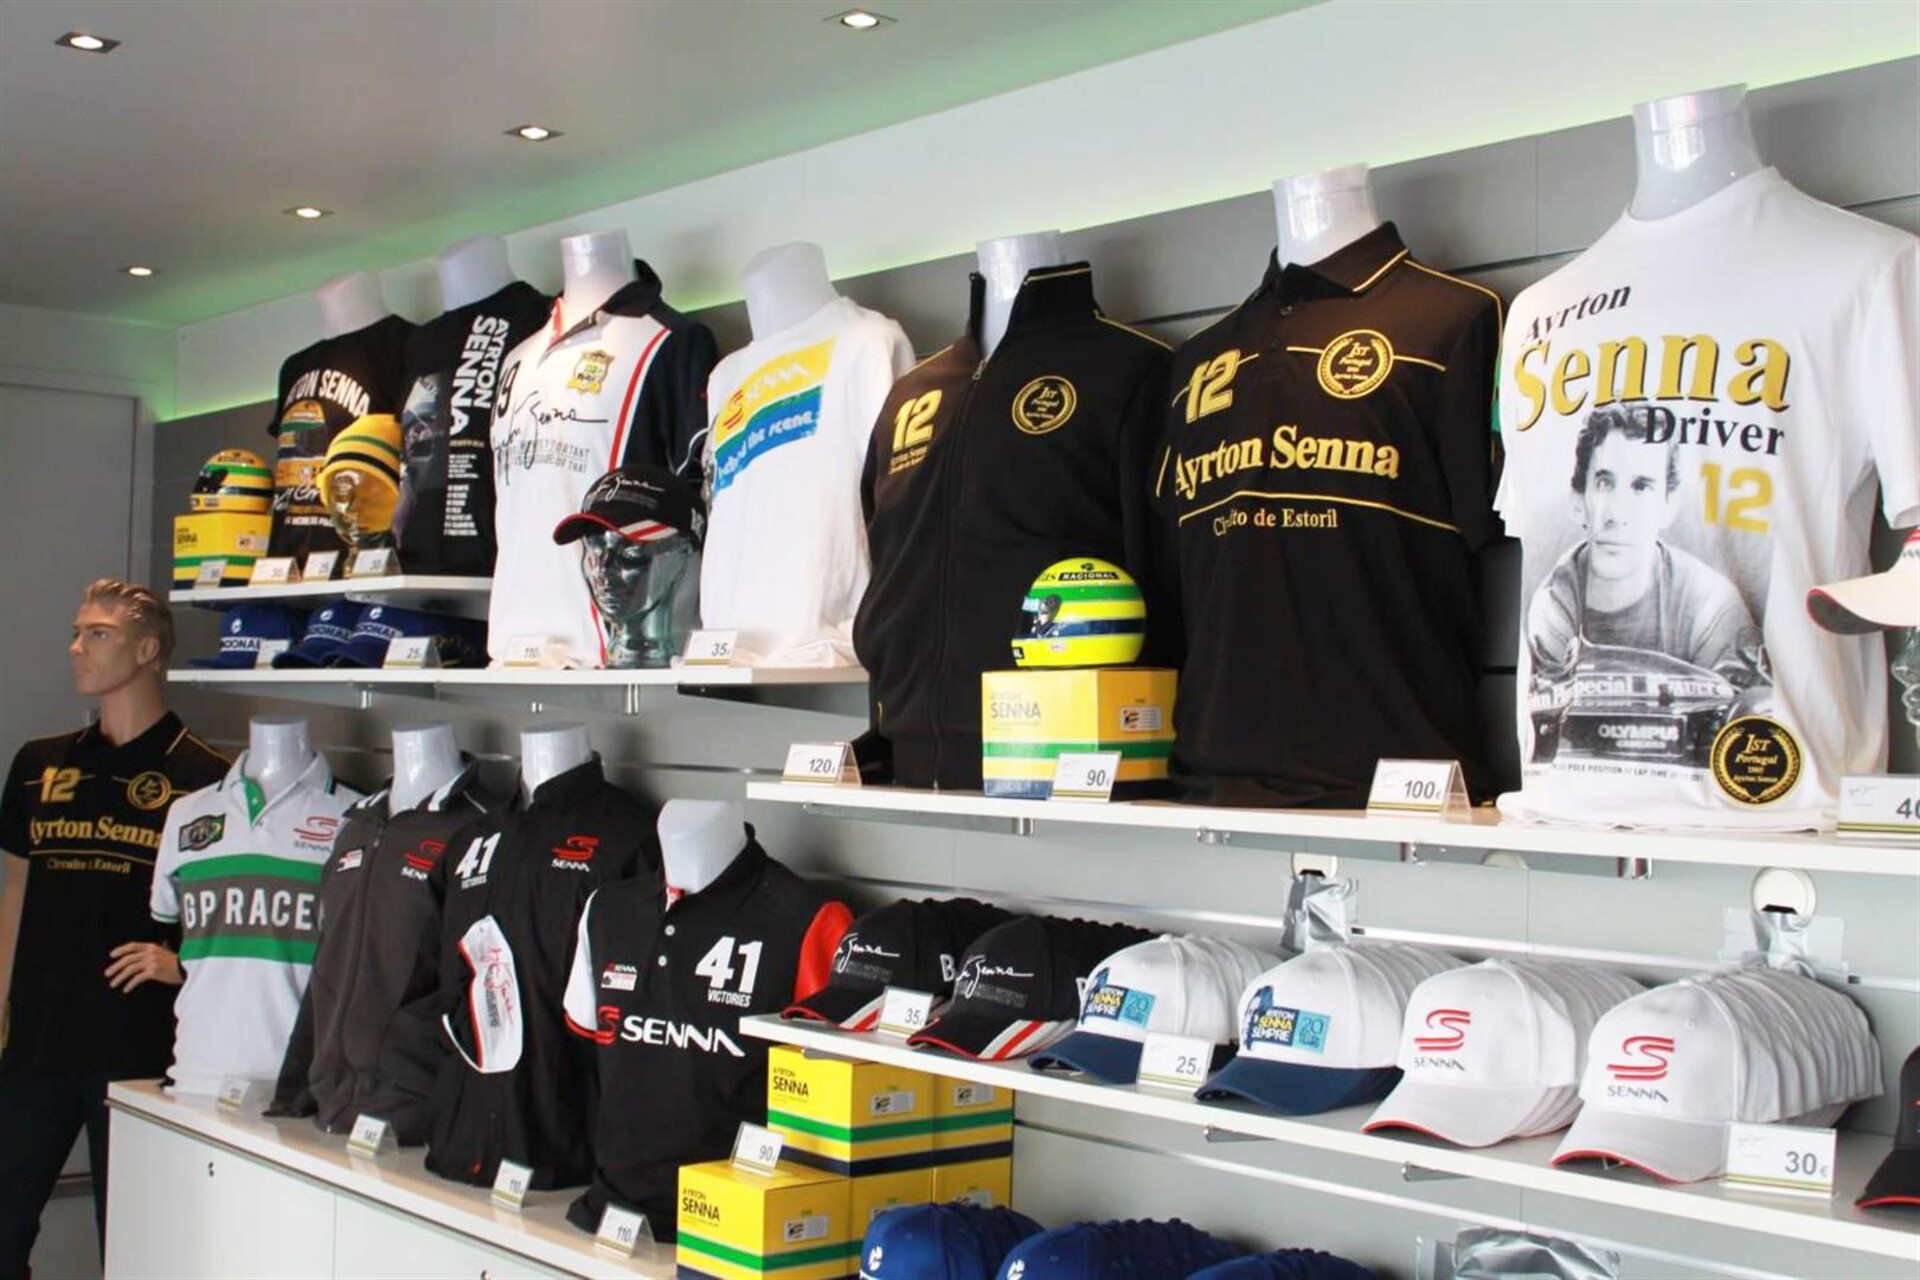 Ayrton_Senna_Shop2-Promostar.jpg